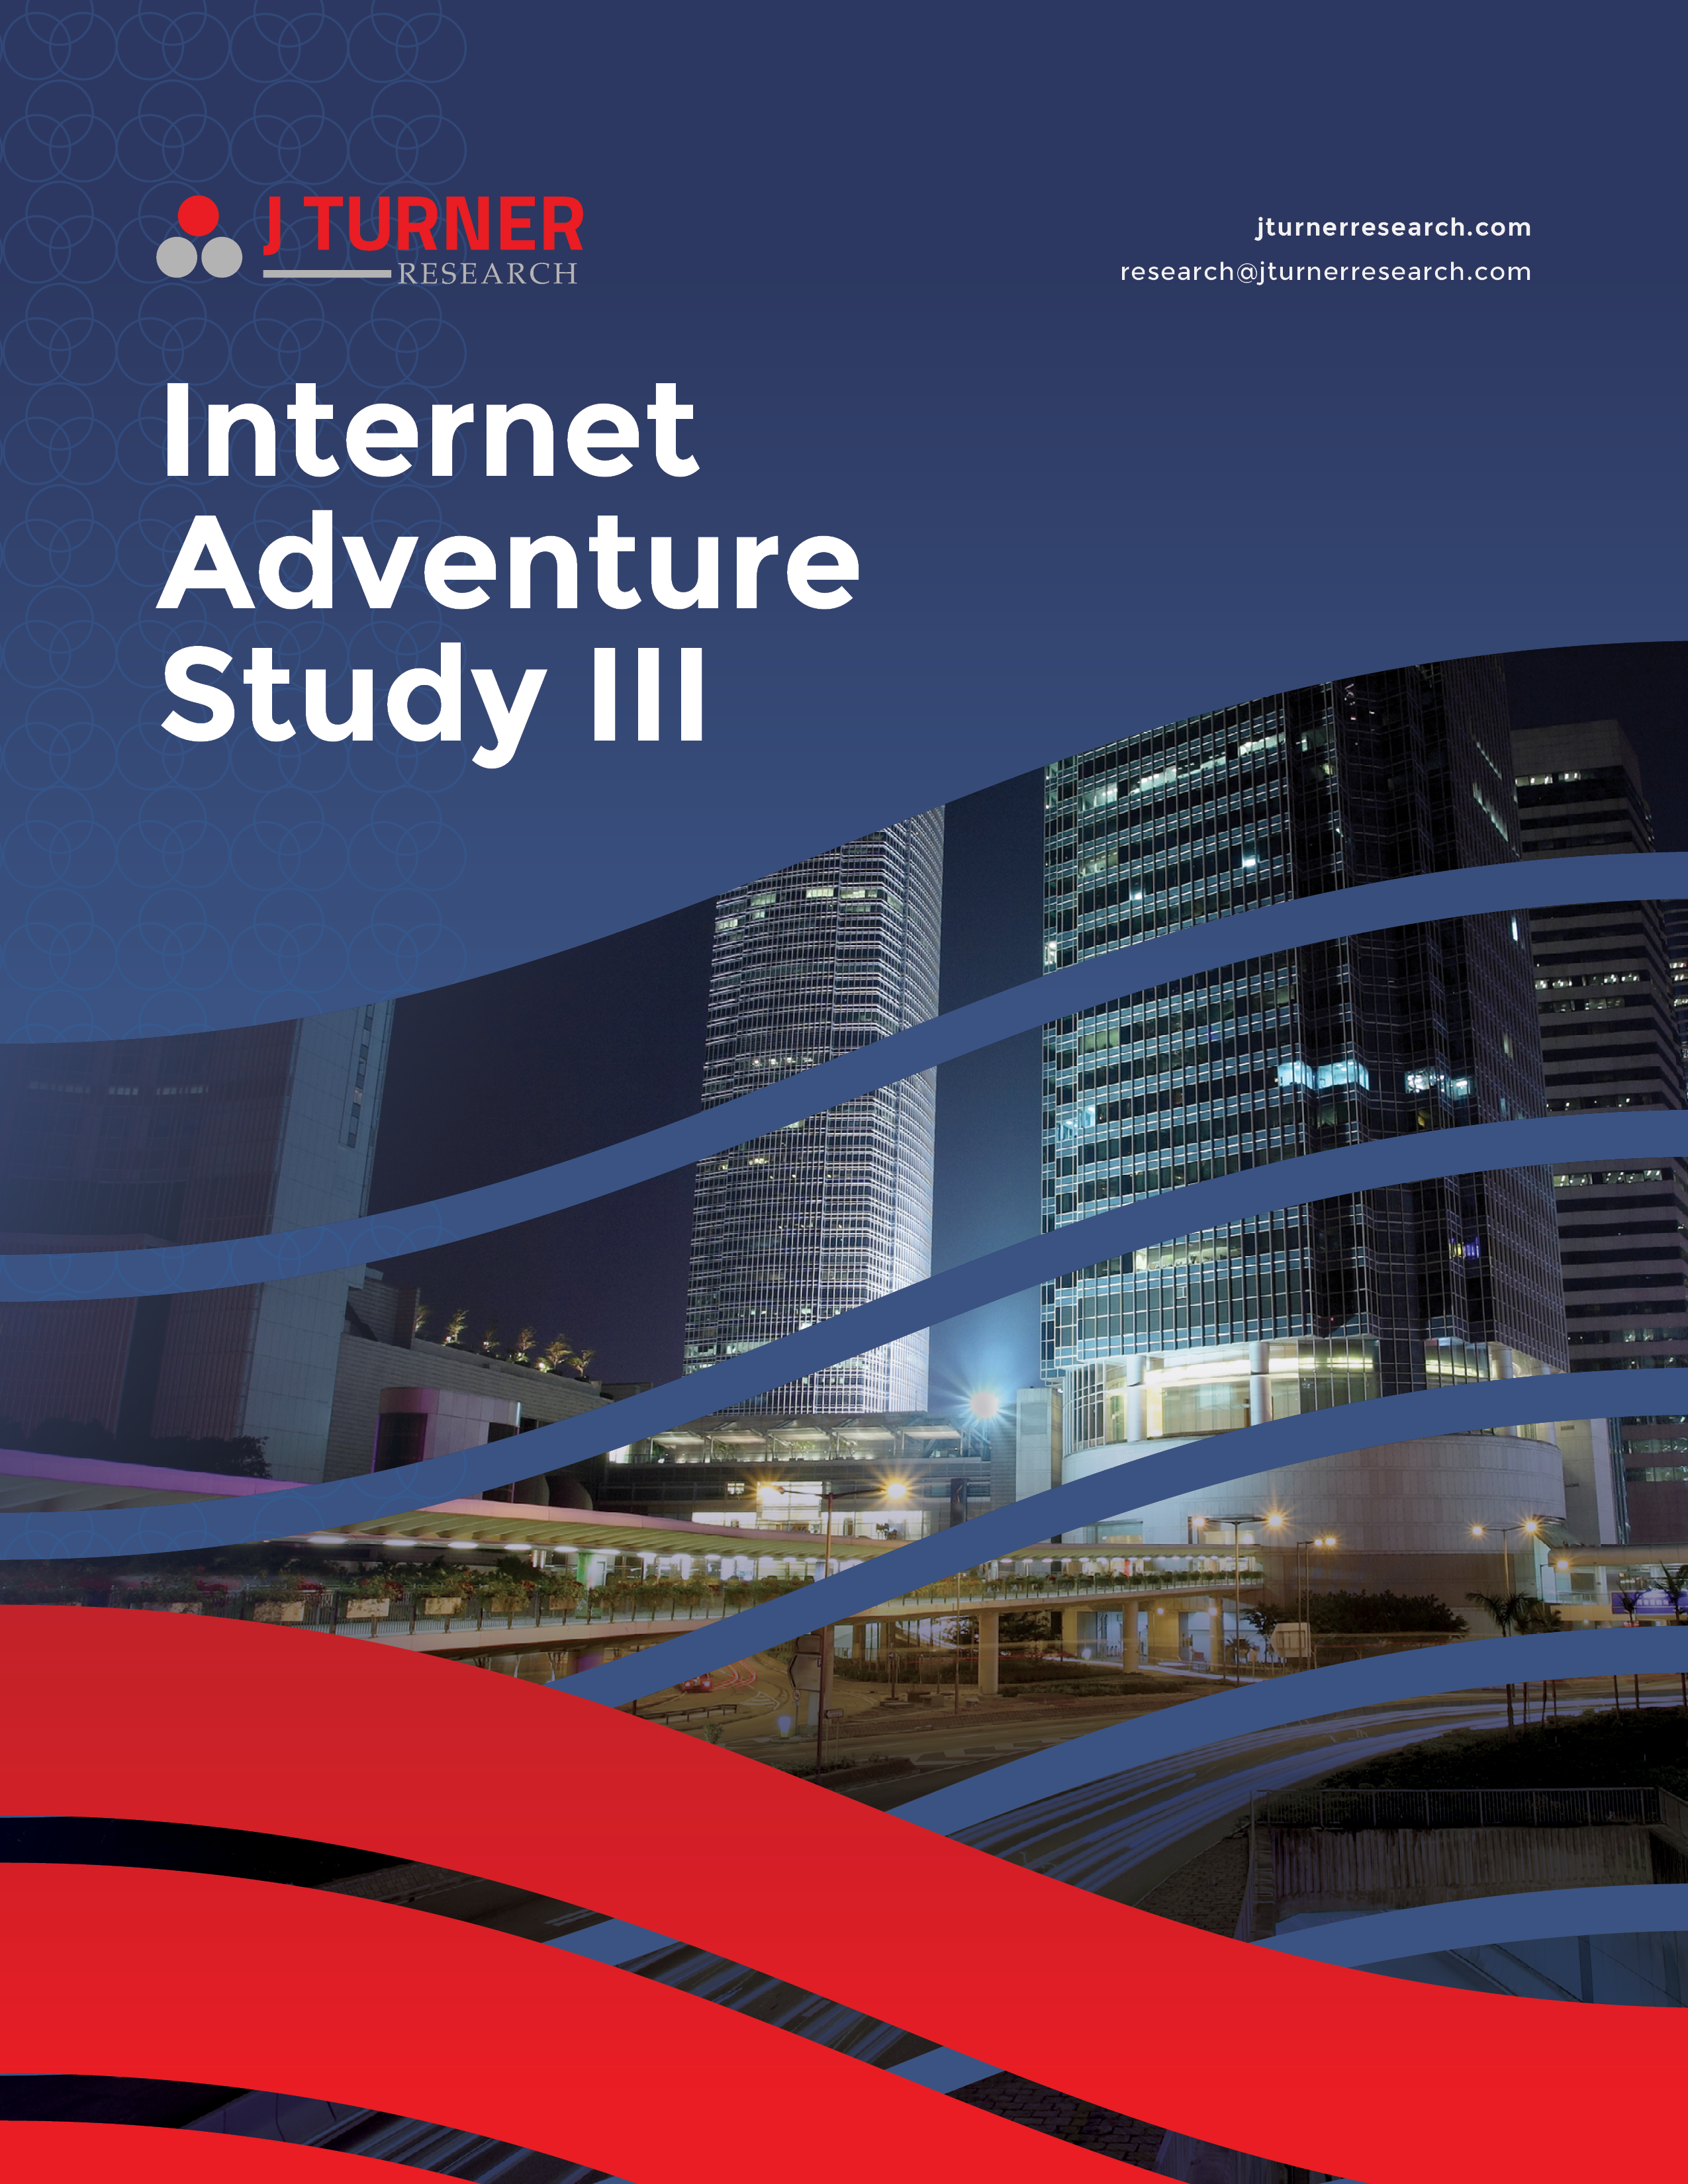 Internet adventure study III